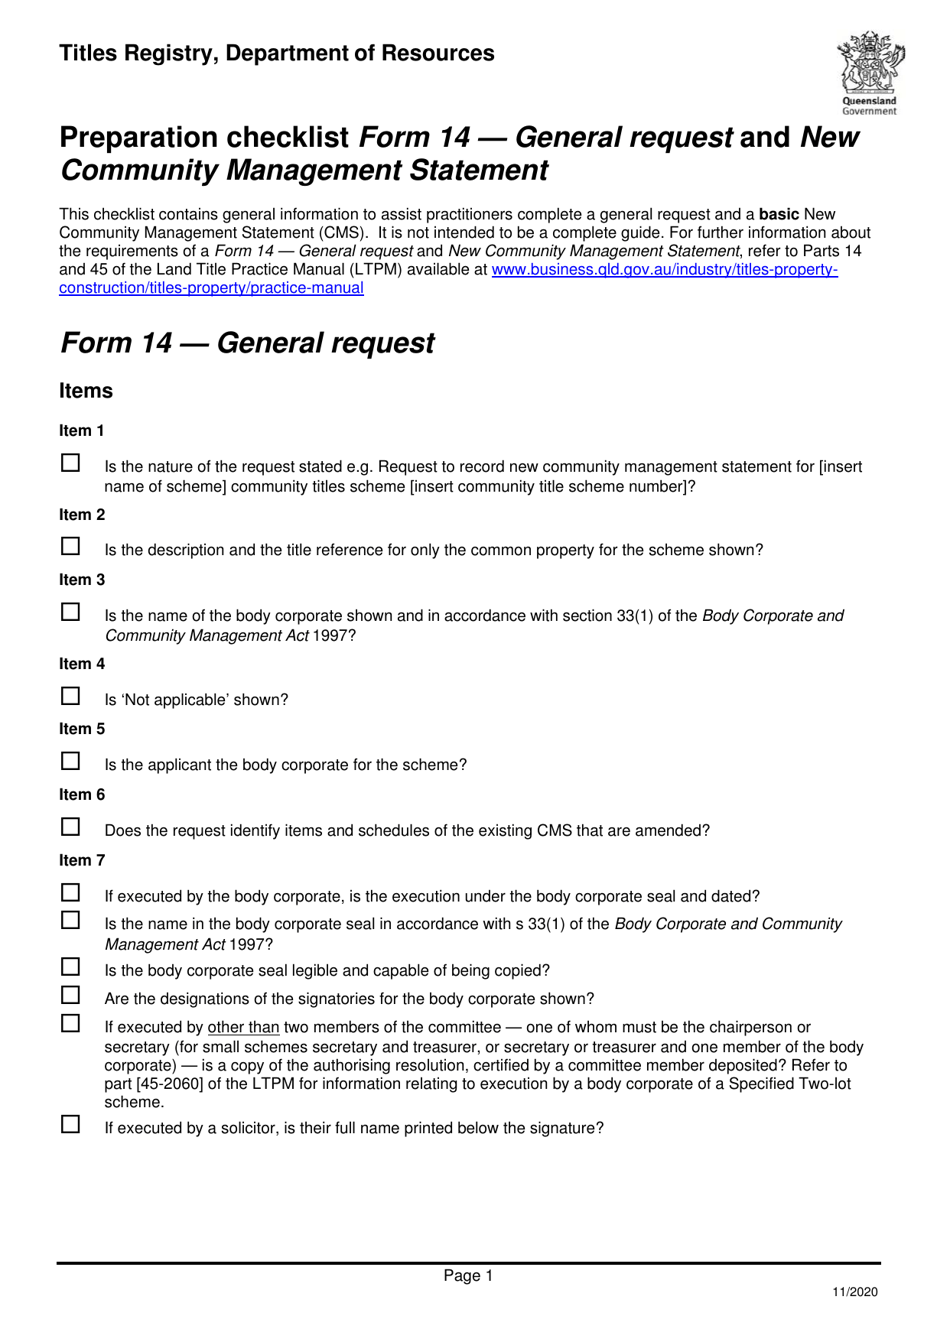 Form 14 Preparation Checklist - General Request and New Community Management Statement - Queensland, Australia, Page 1